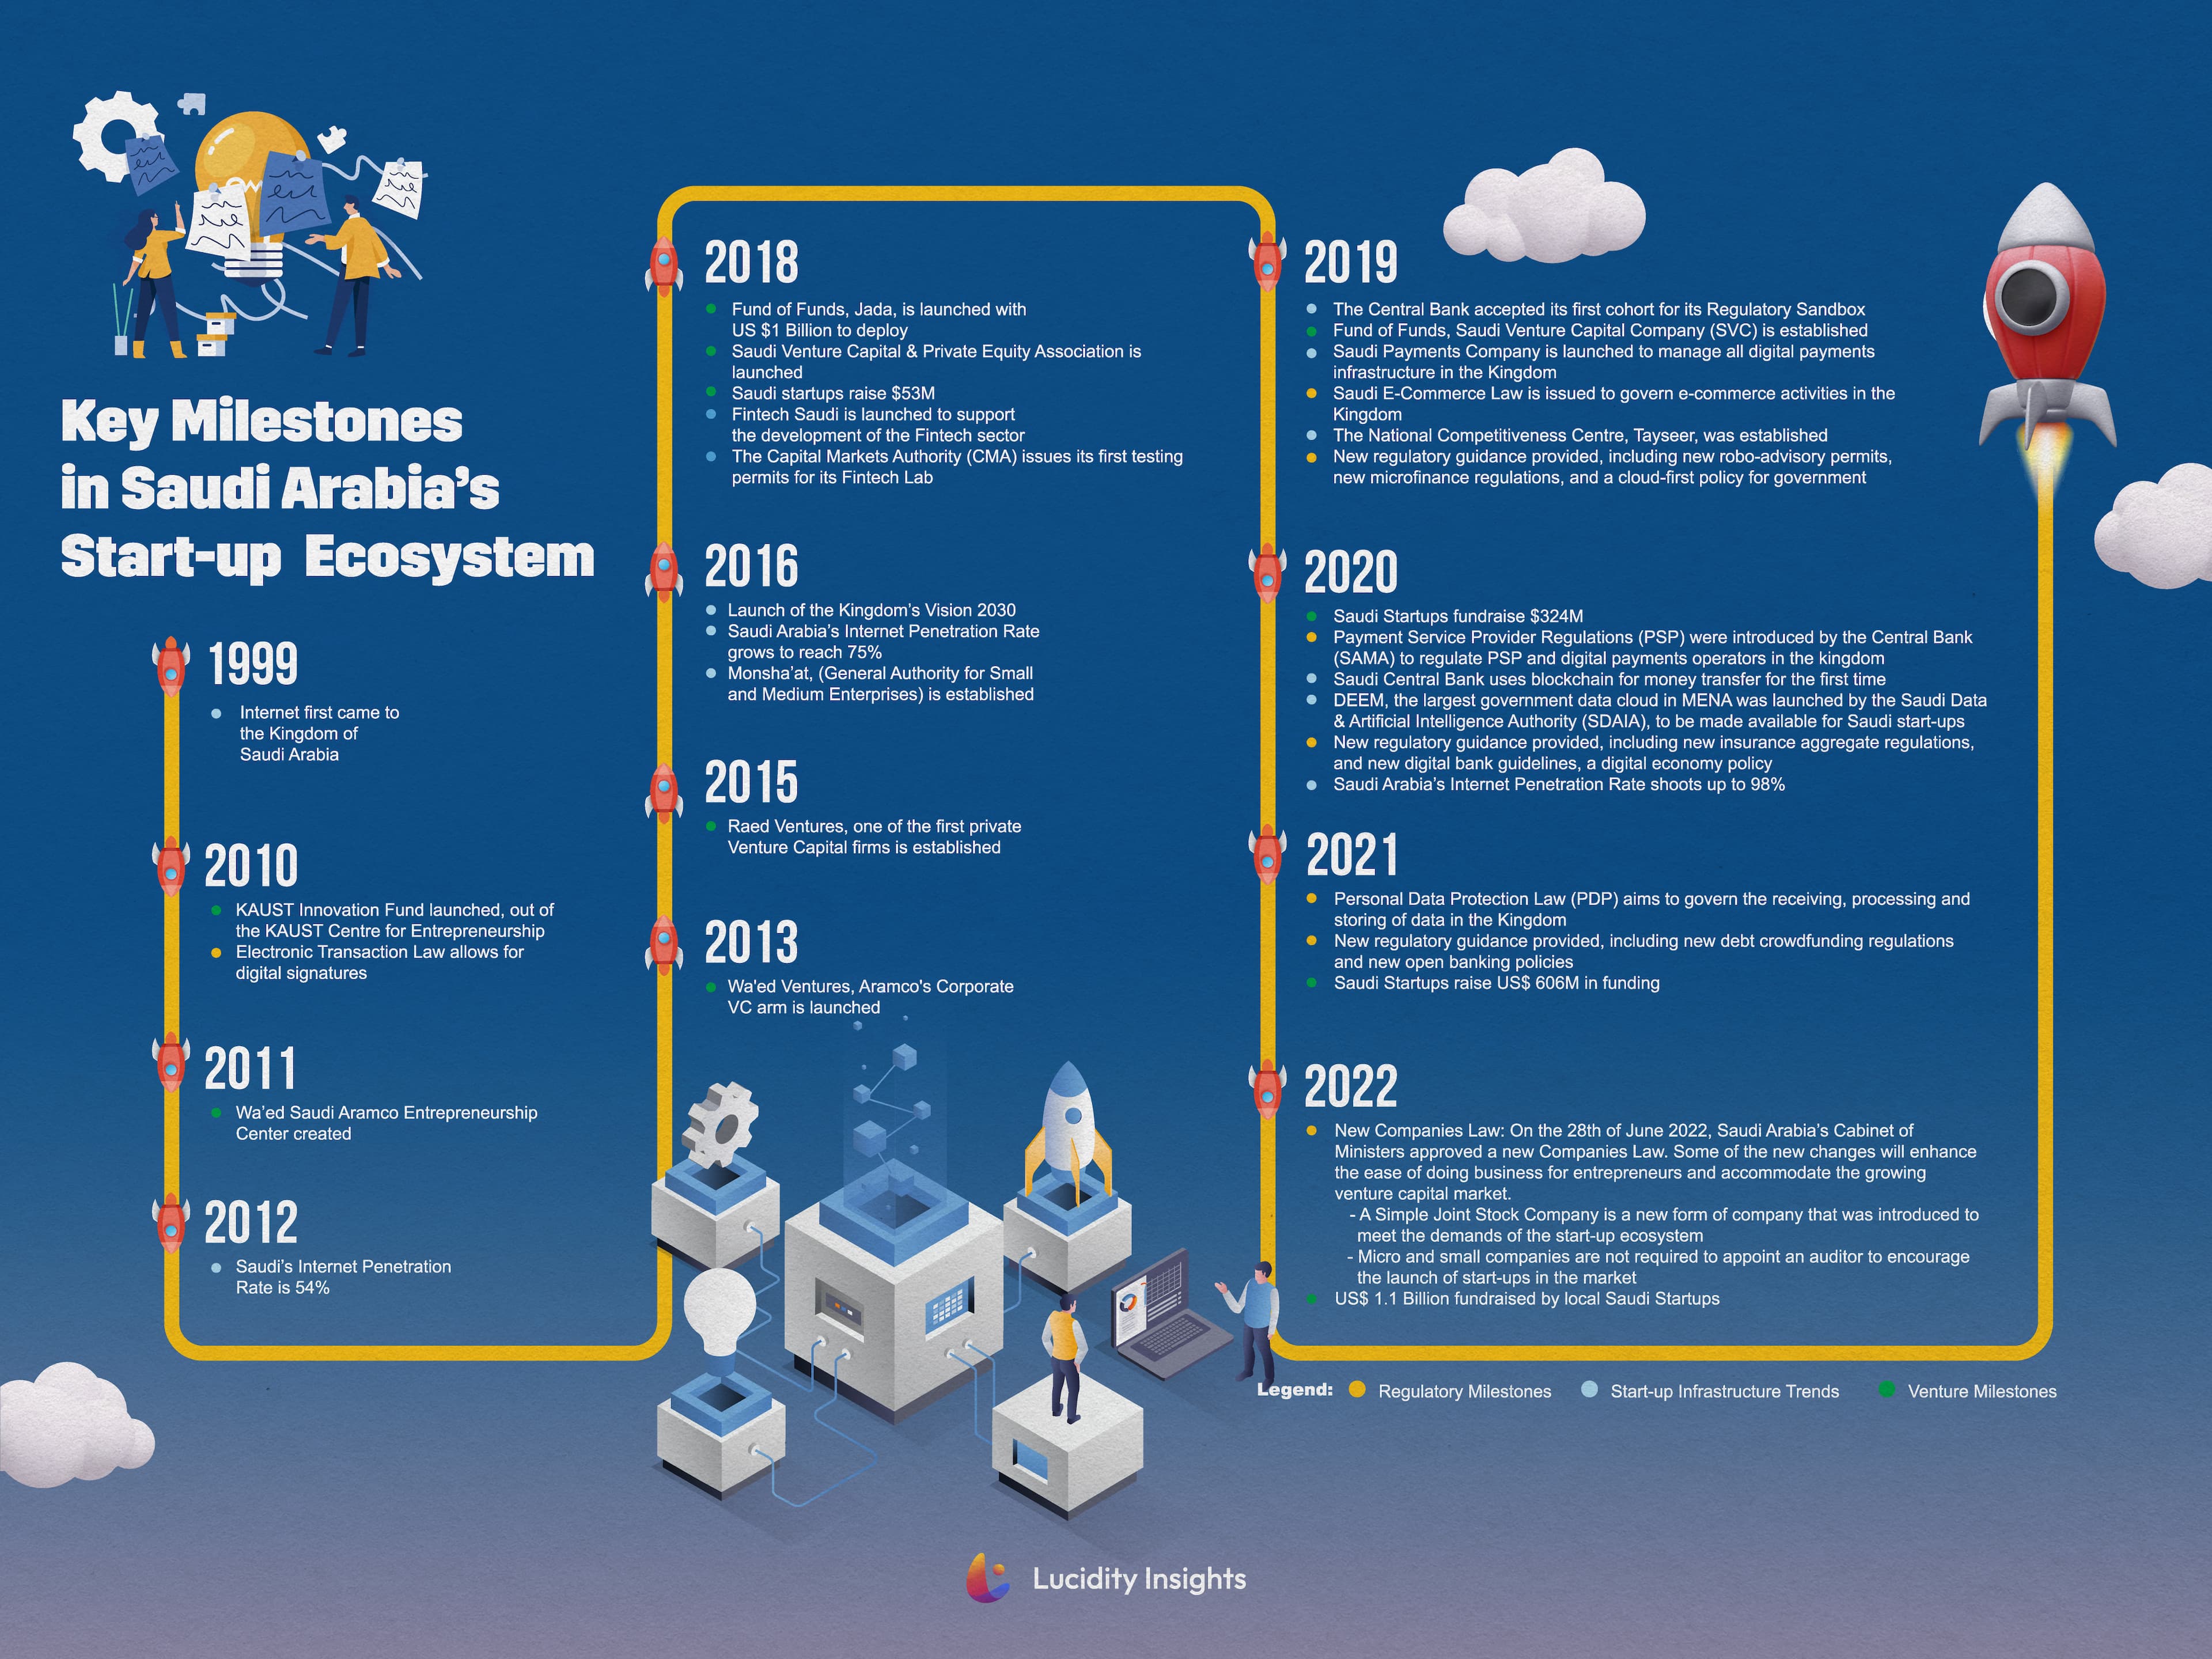 Key Milestones in Saudi Arabia’s Start-up Ecosystem